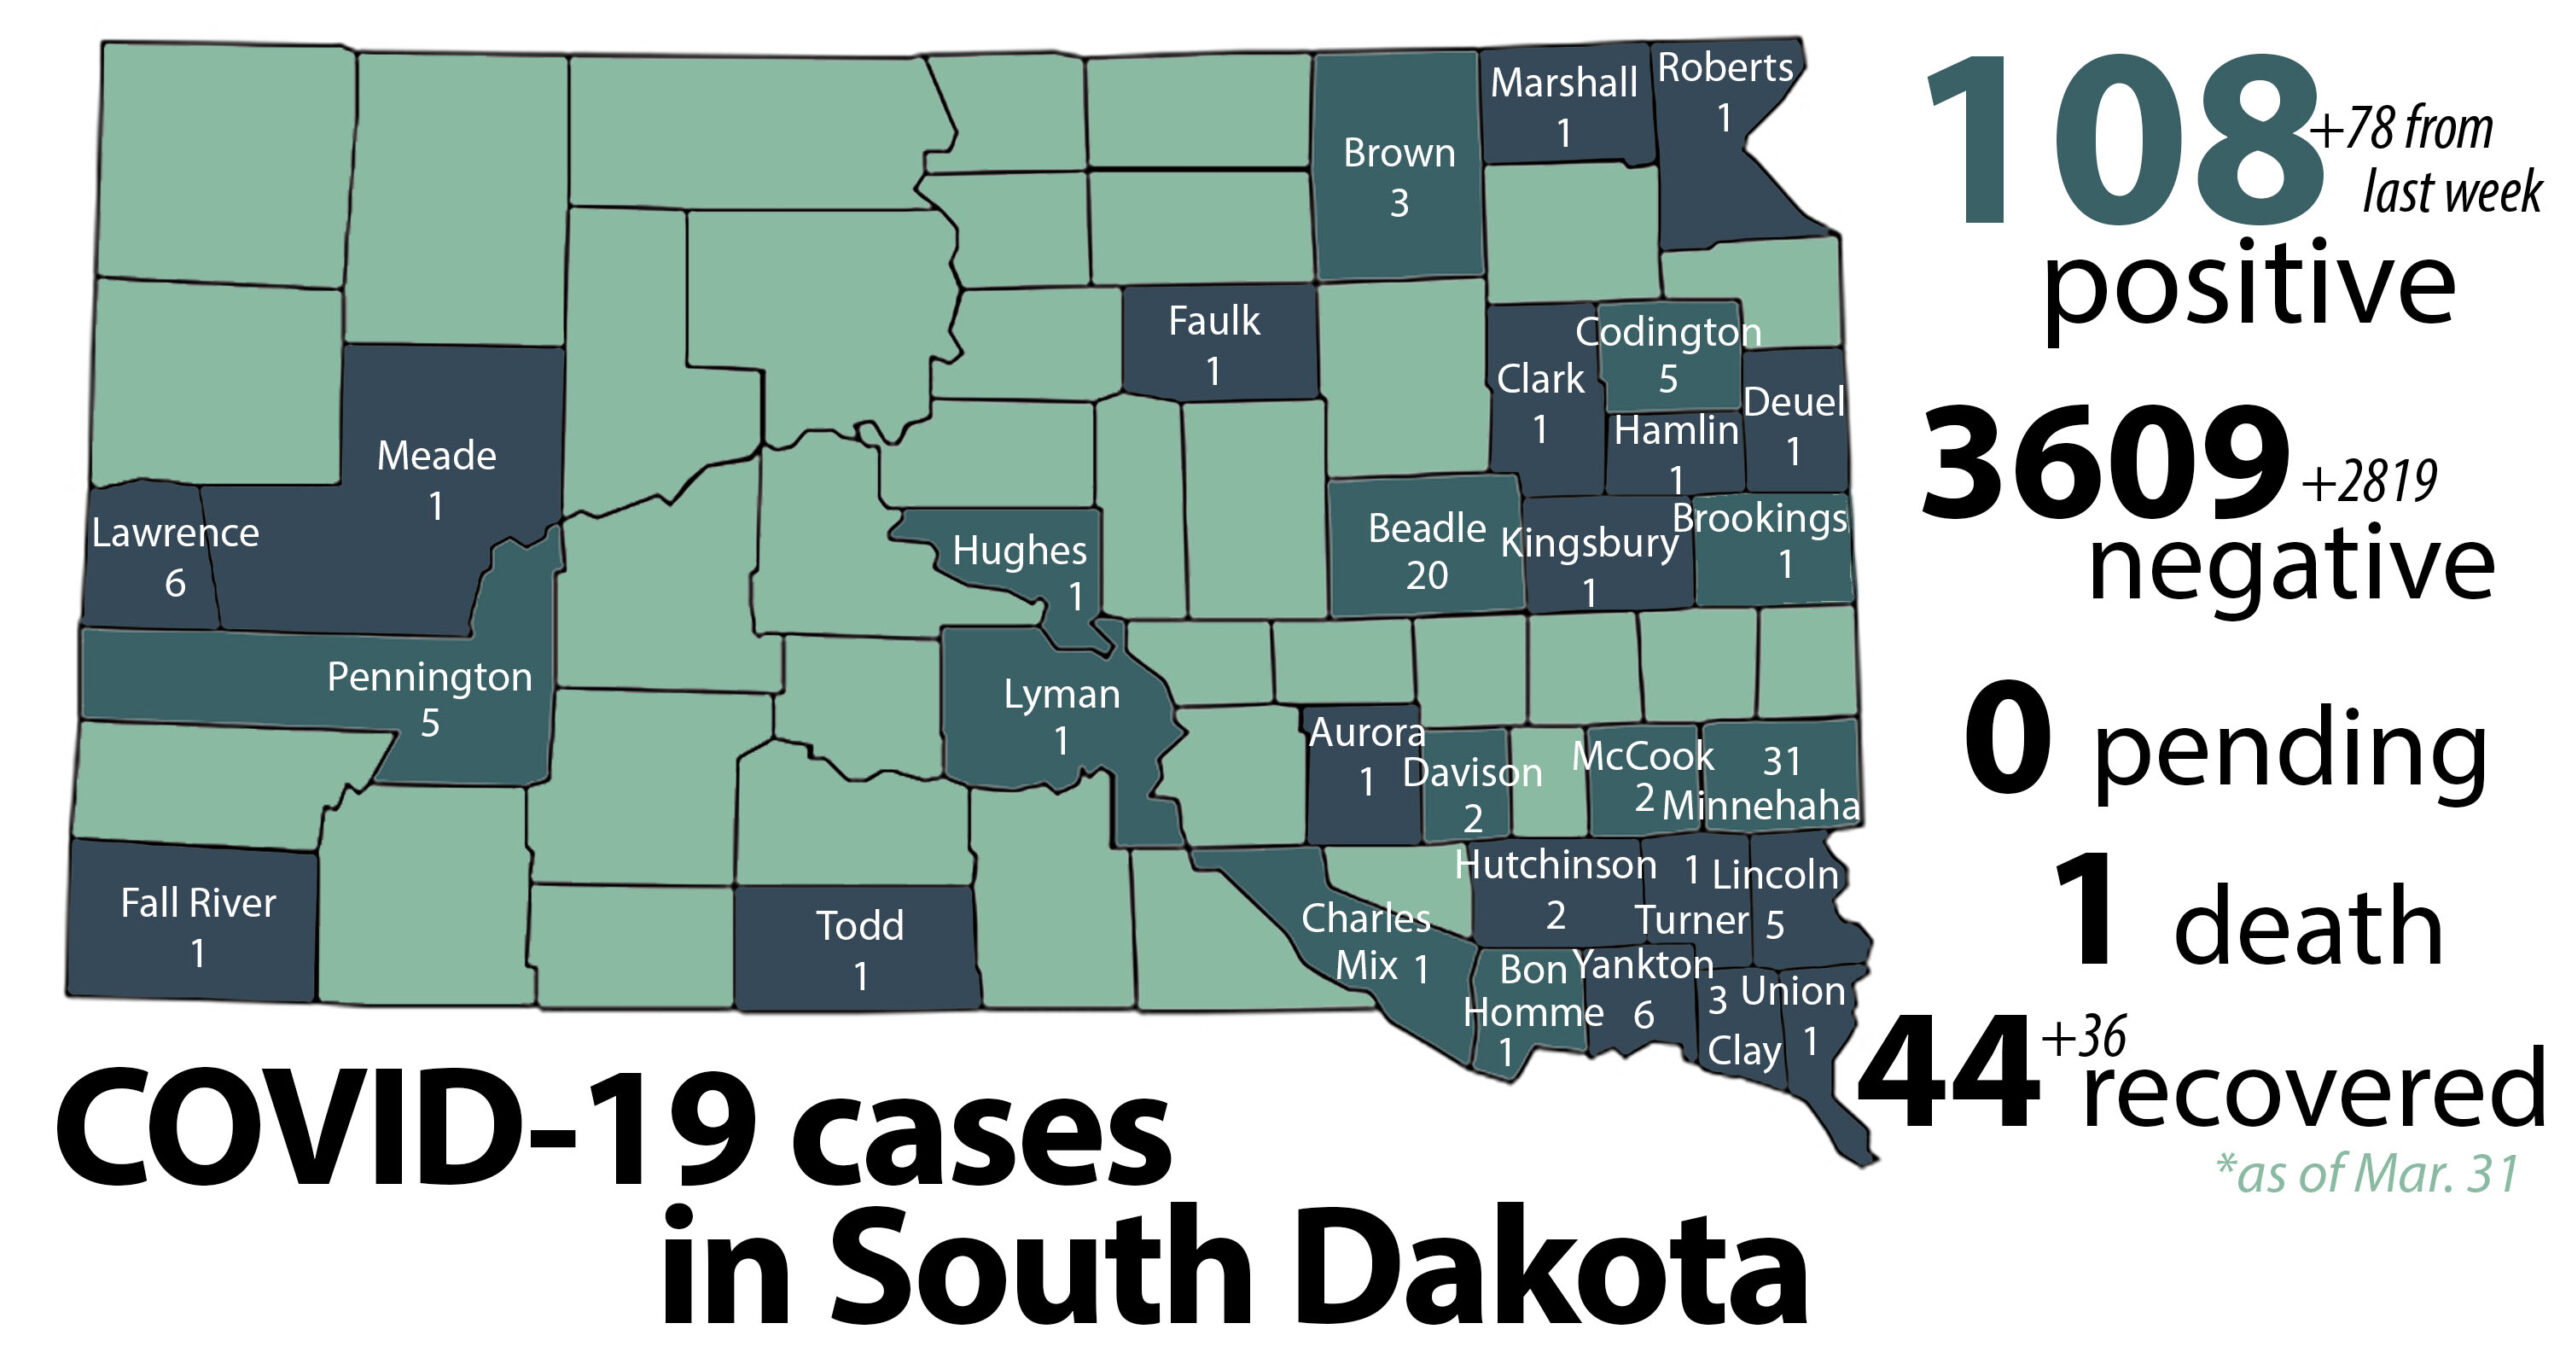 South Dakota reaches 108 cases of COVID-19